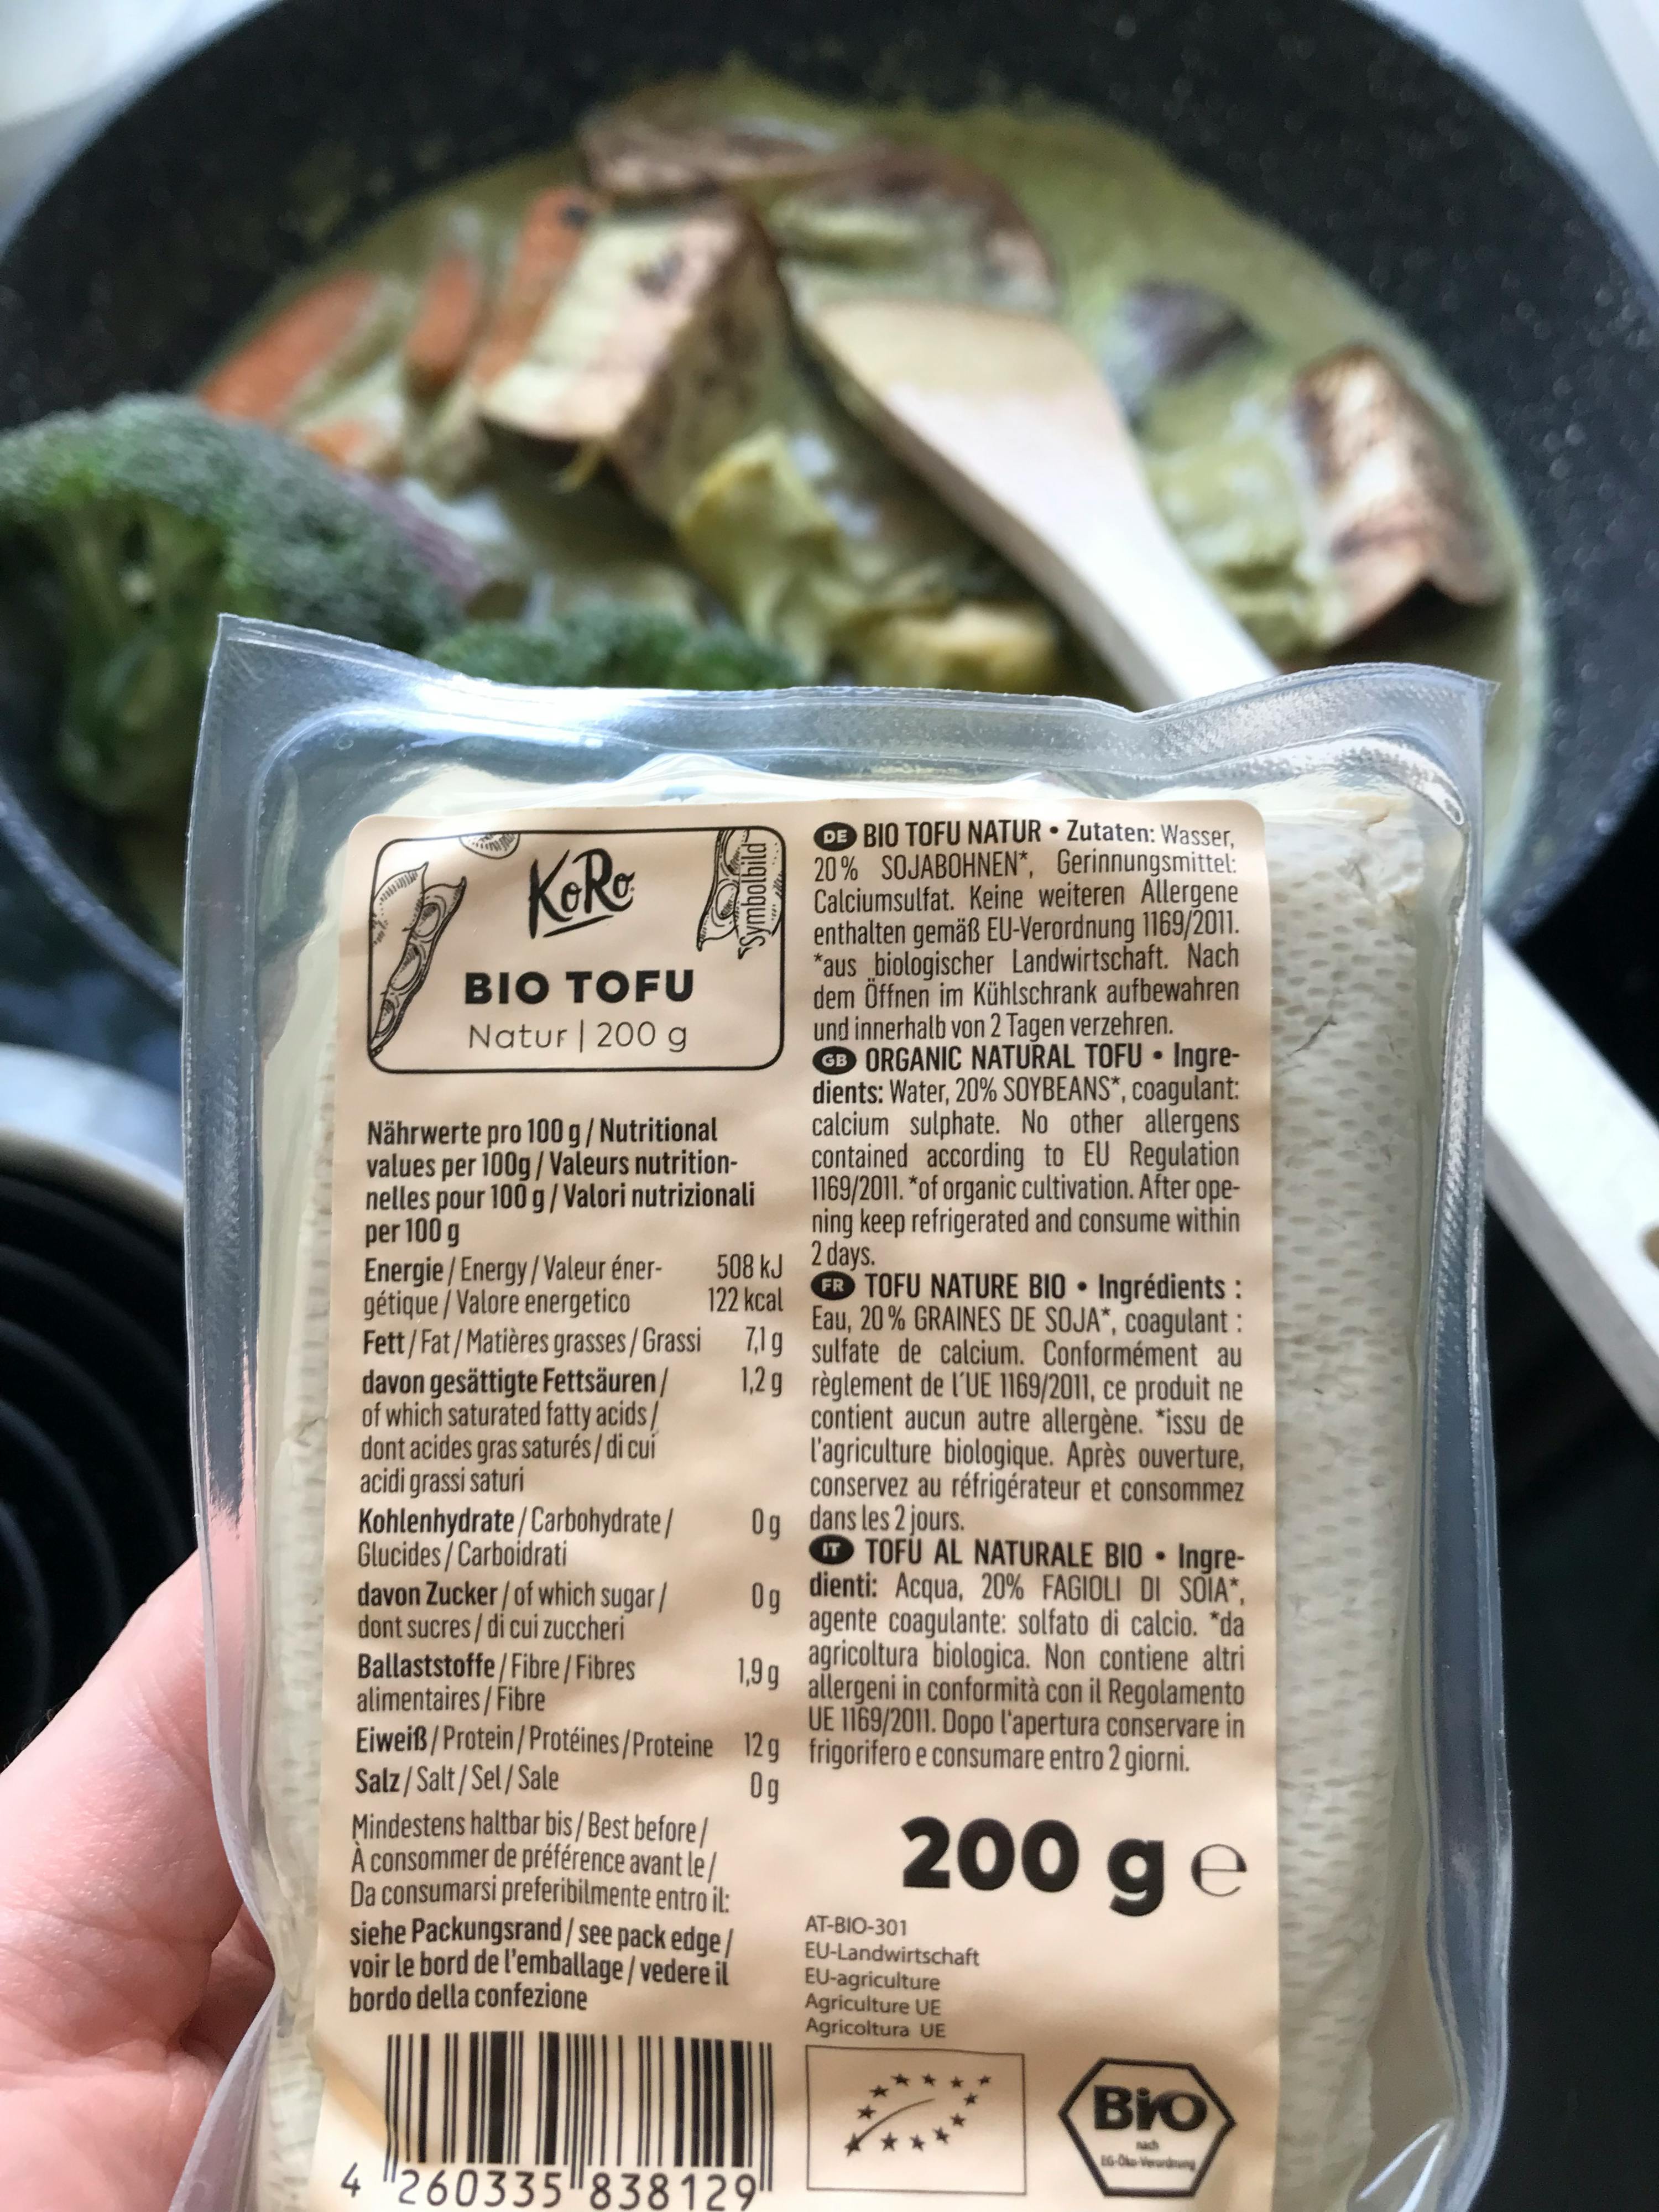 Tofu al naturale bio - acquista ora!